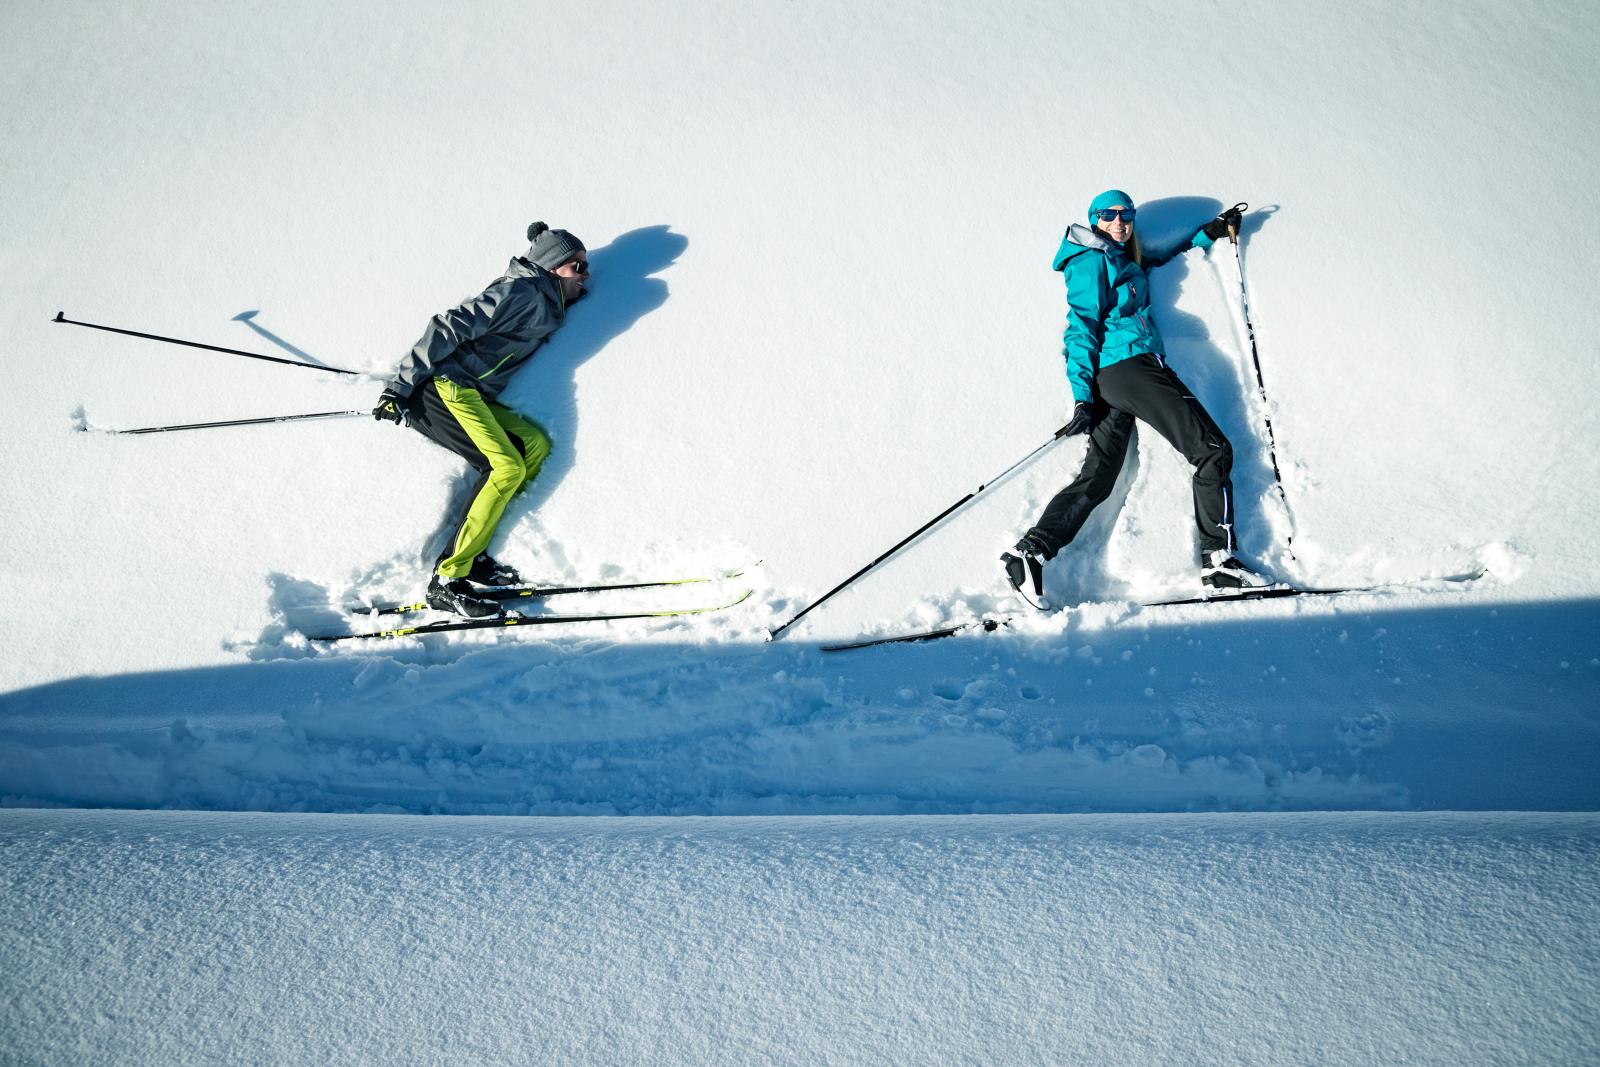 Skiing cross country skis. Беговые лыжи. Спортивные лыжи. Лыжник беговые лыжи. Современные беговые лыжи.